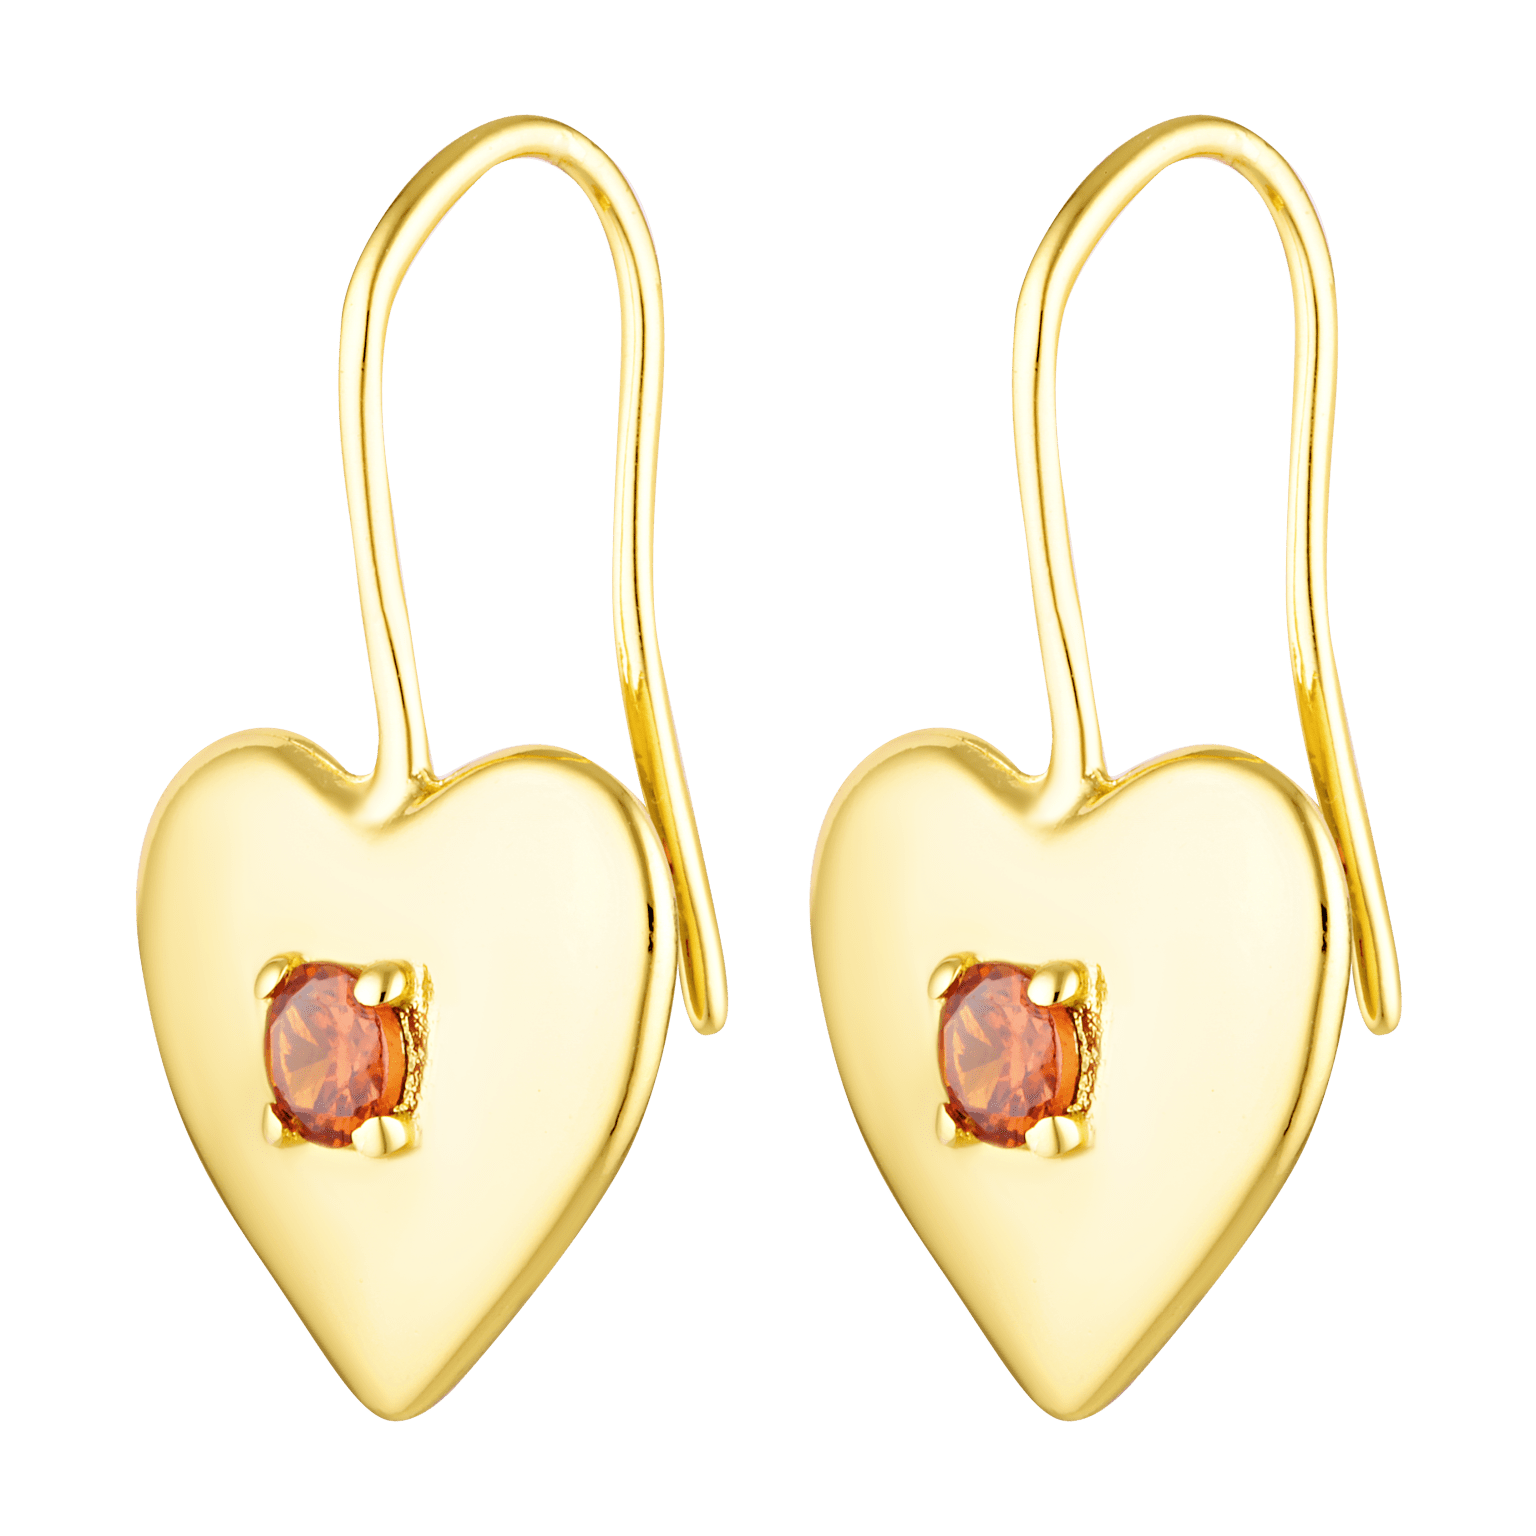 Beautiful handmade red centre heart earrings